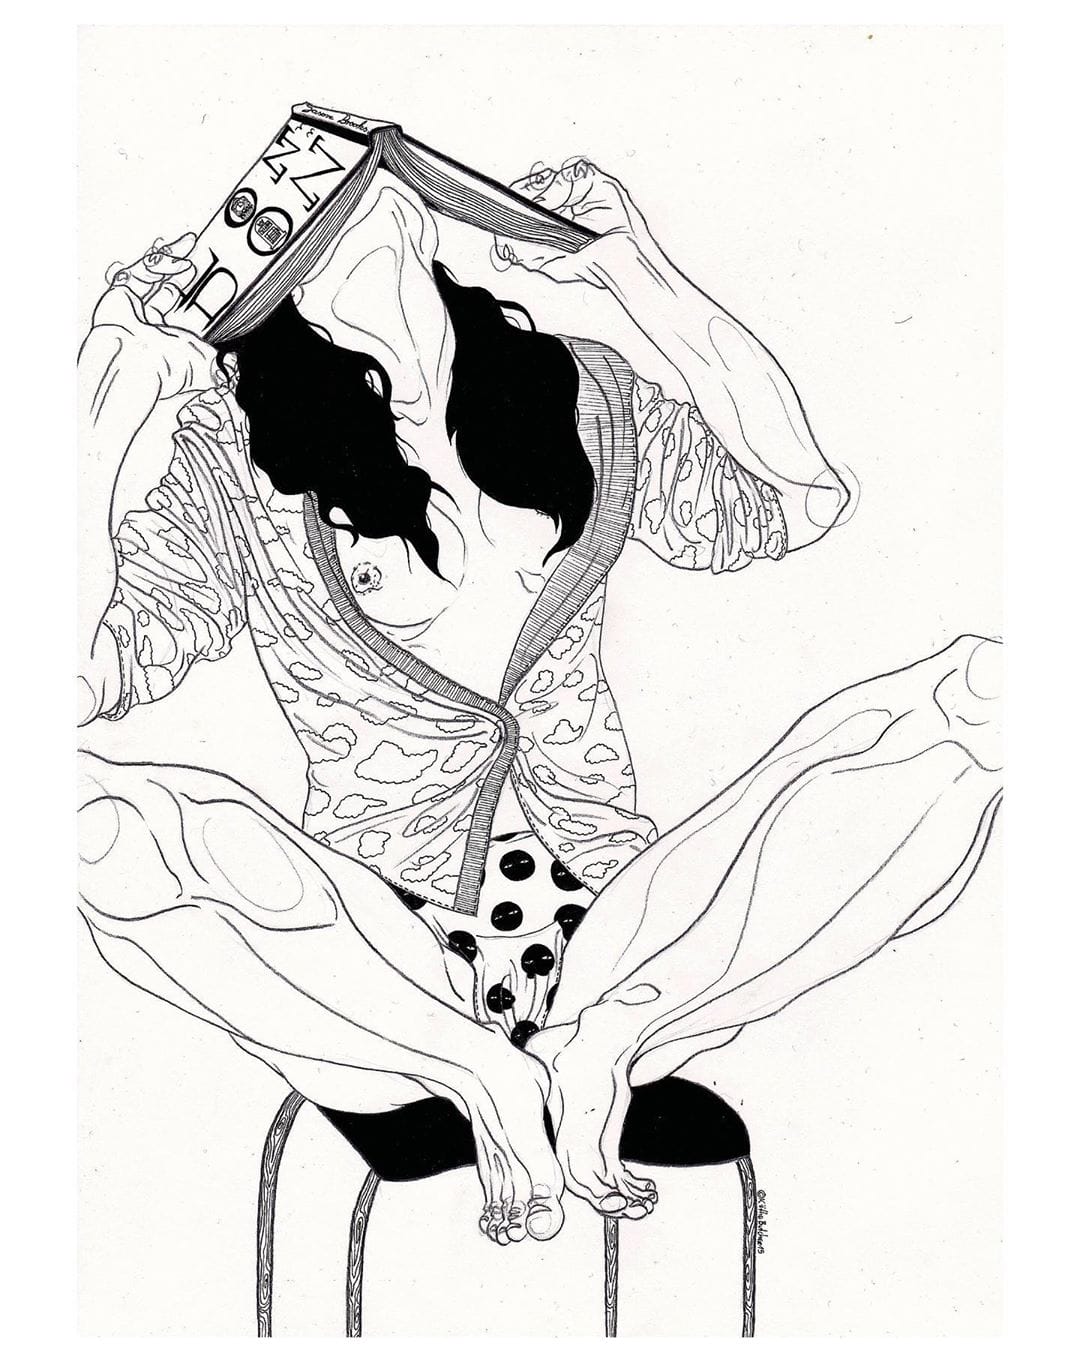 Kathe Butcher illustration. 
Noir et blanc